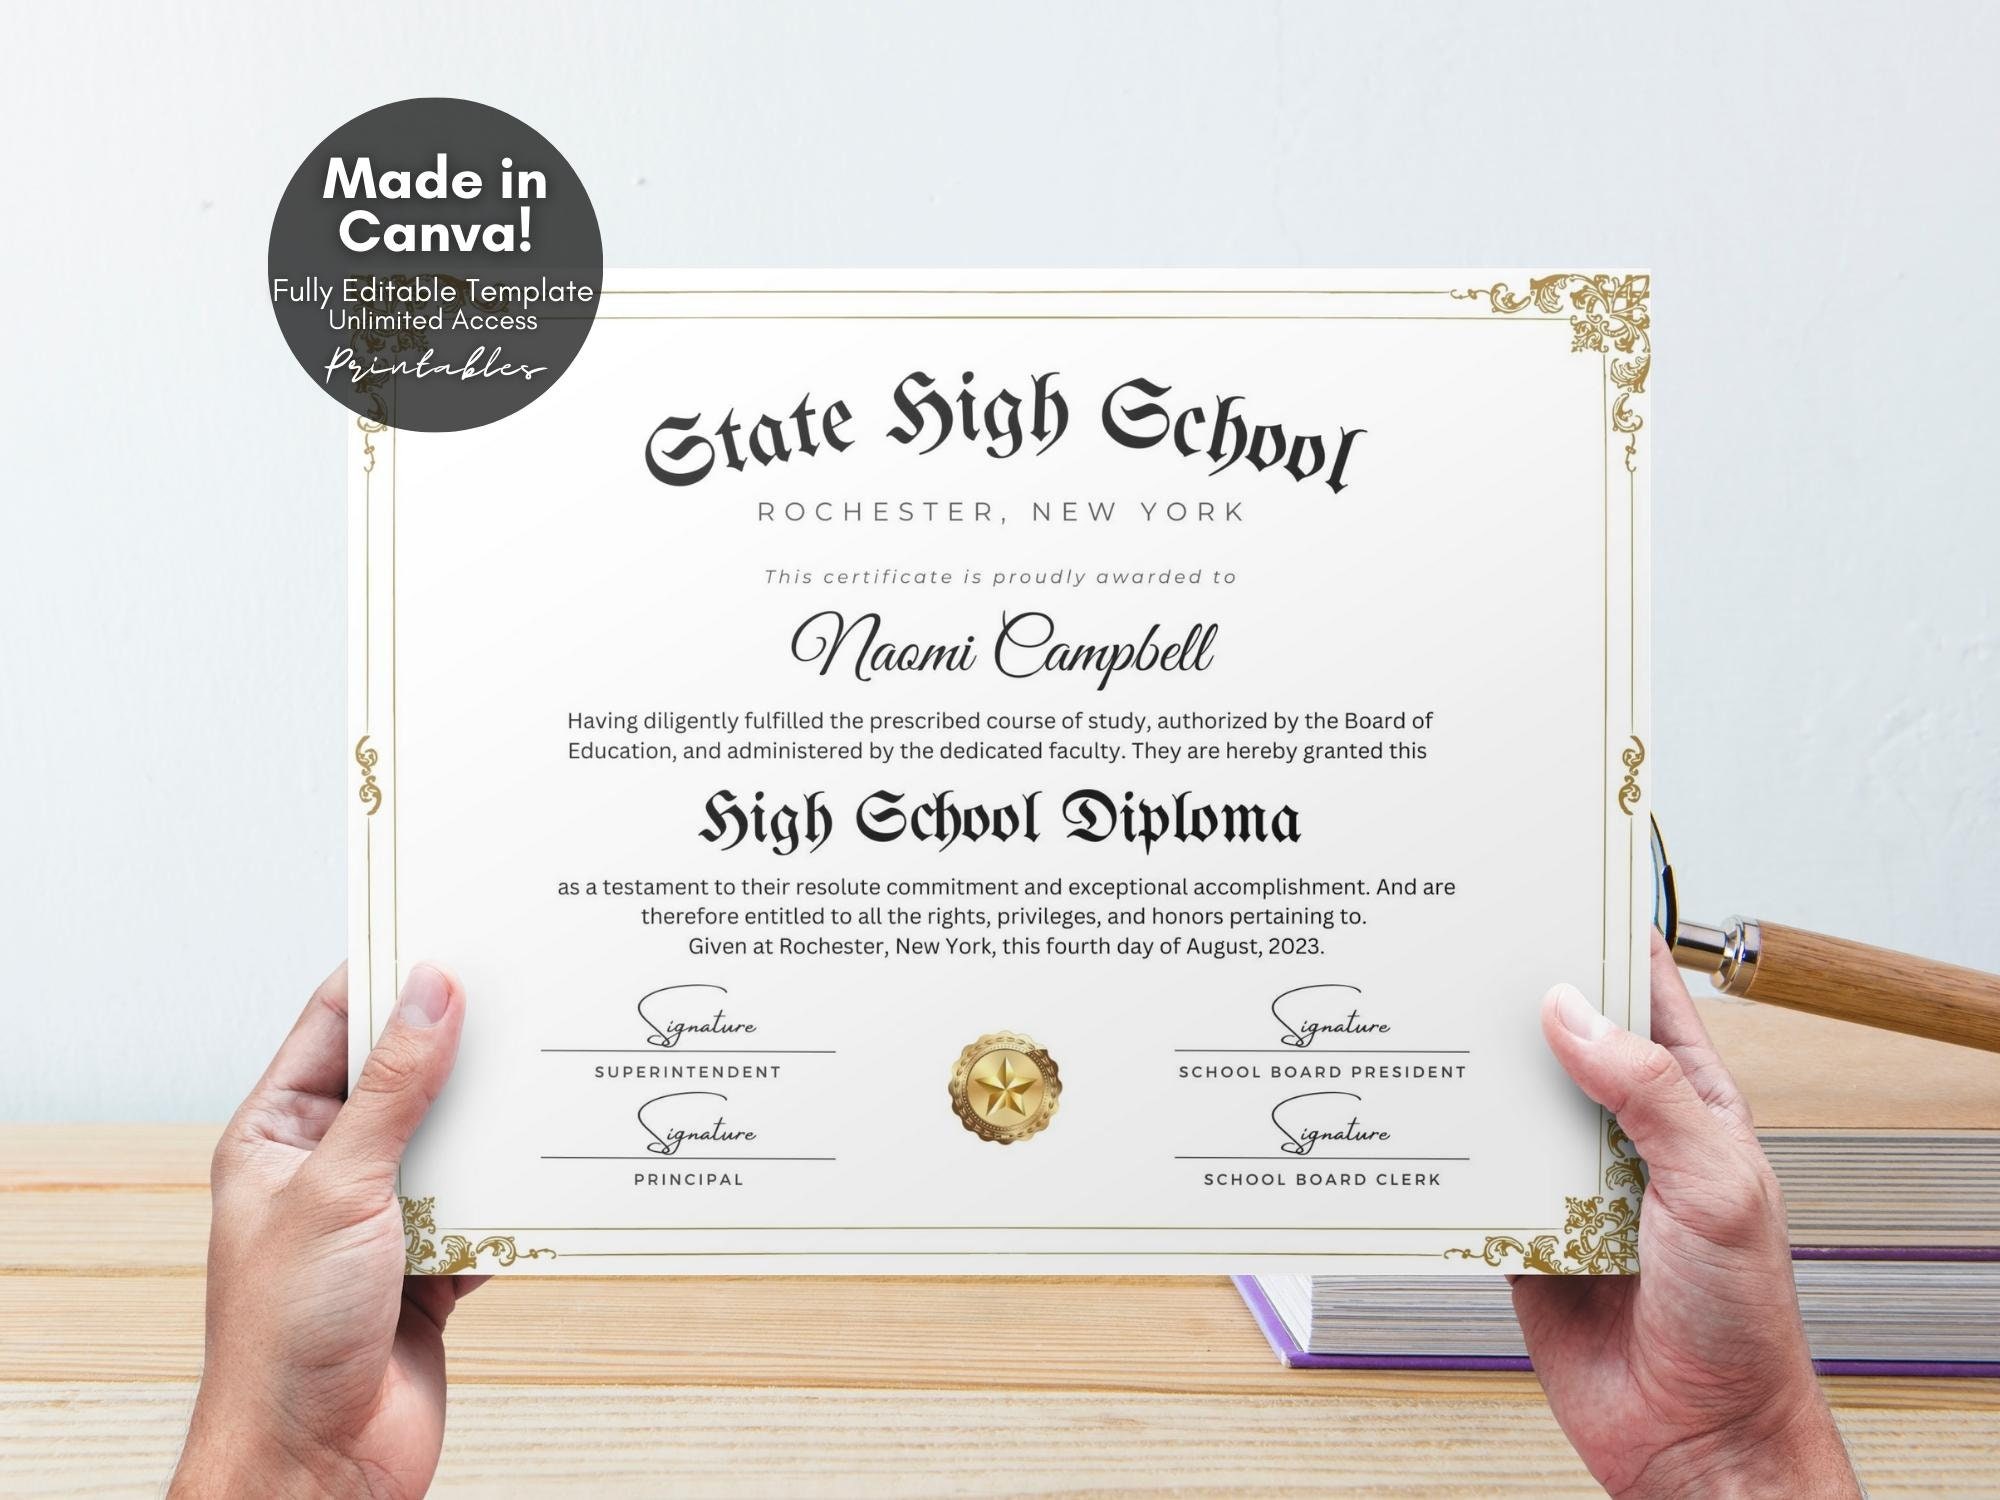 Middle School Diploma Printing - Graduation Ink Diplomas